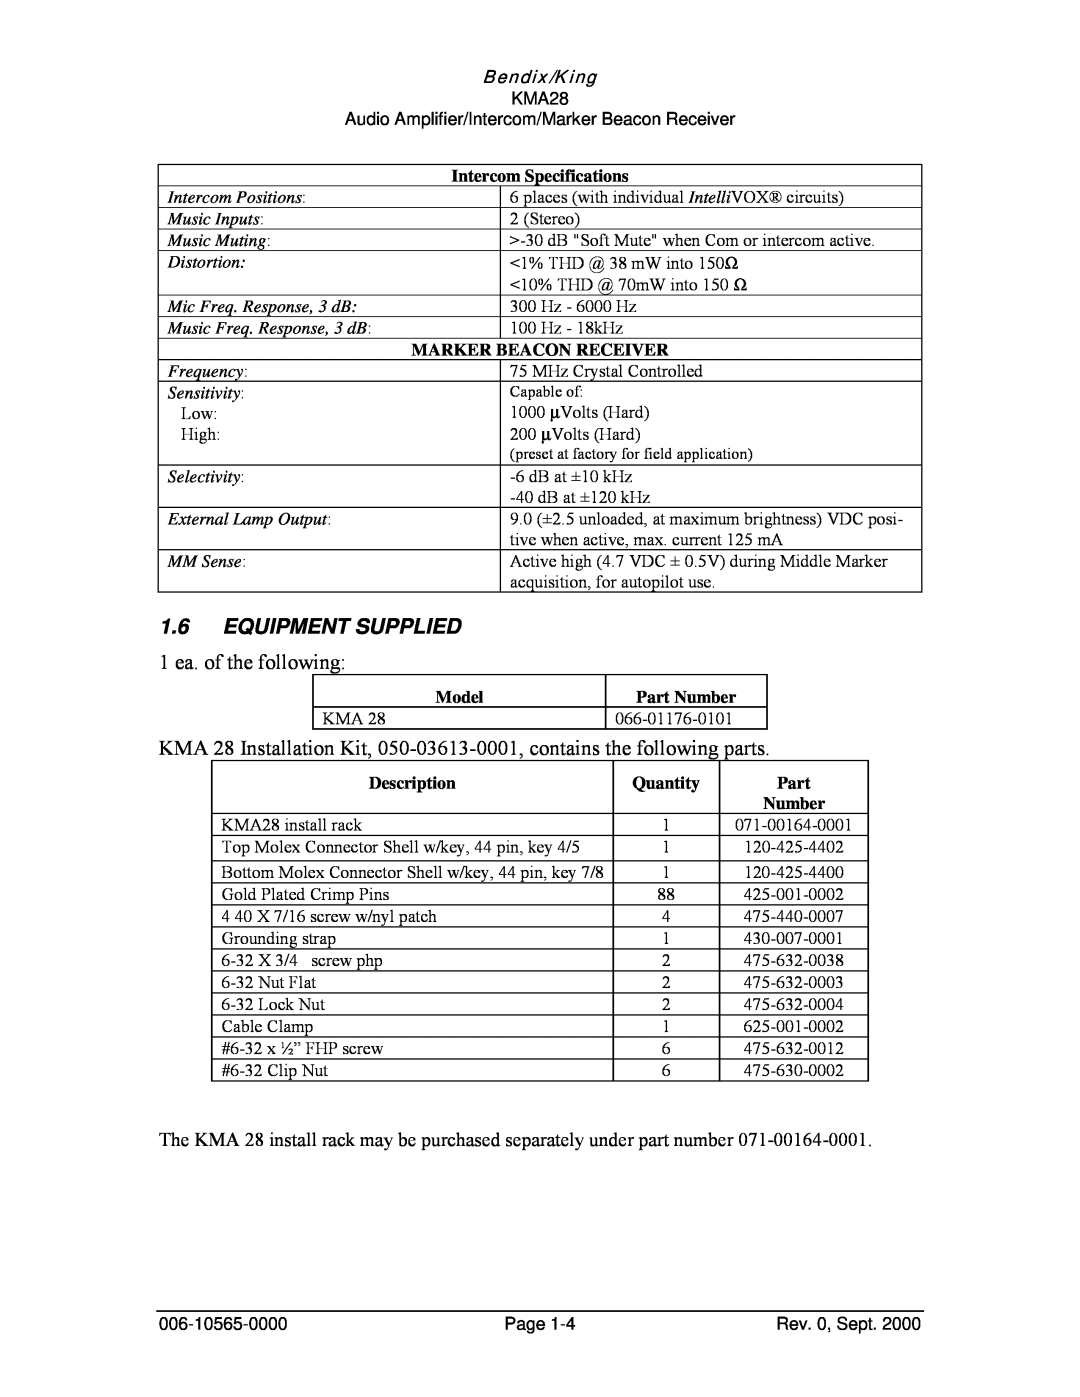 Honeywell KMA28 Equipment Supplied, 1 ea. of the following, Audio Amplifier/Intercom/Marker Beacon Receiver, Model 